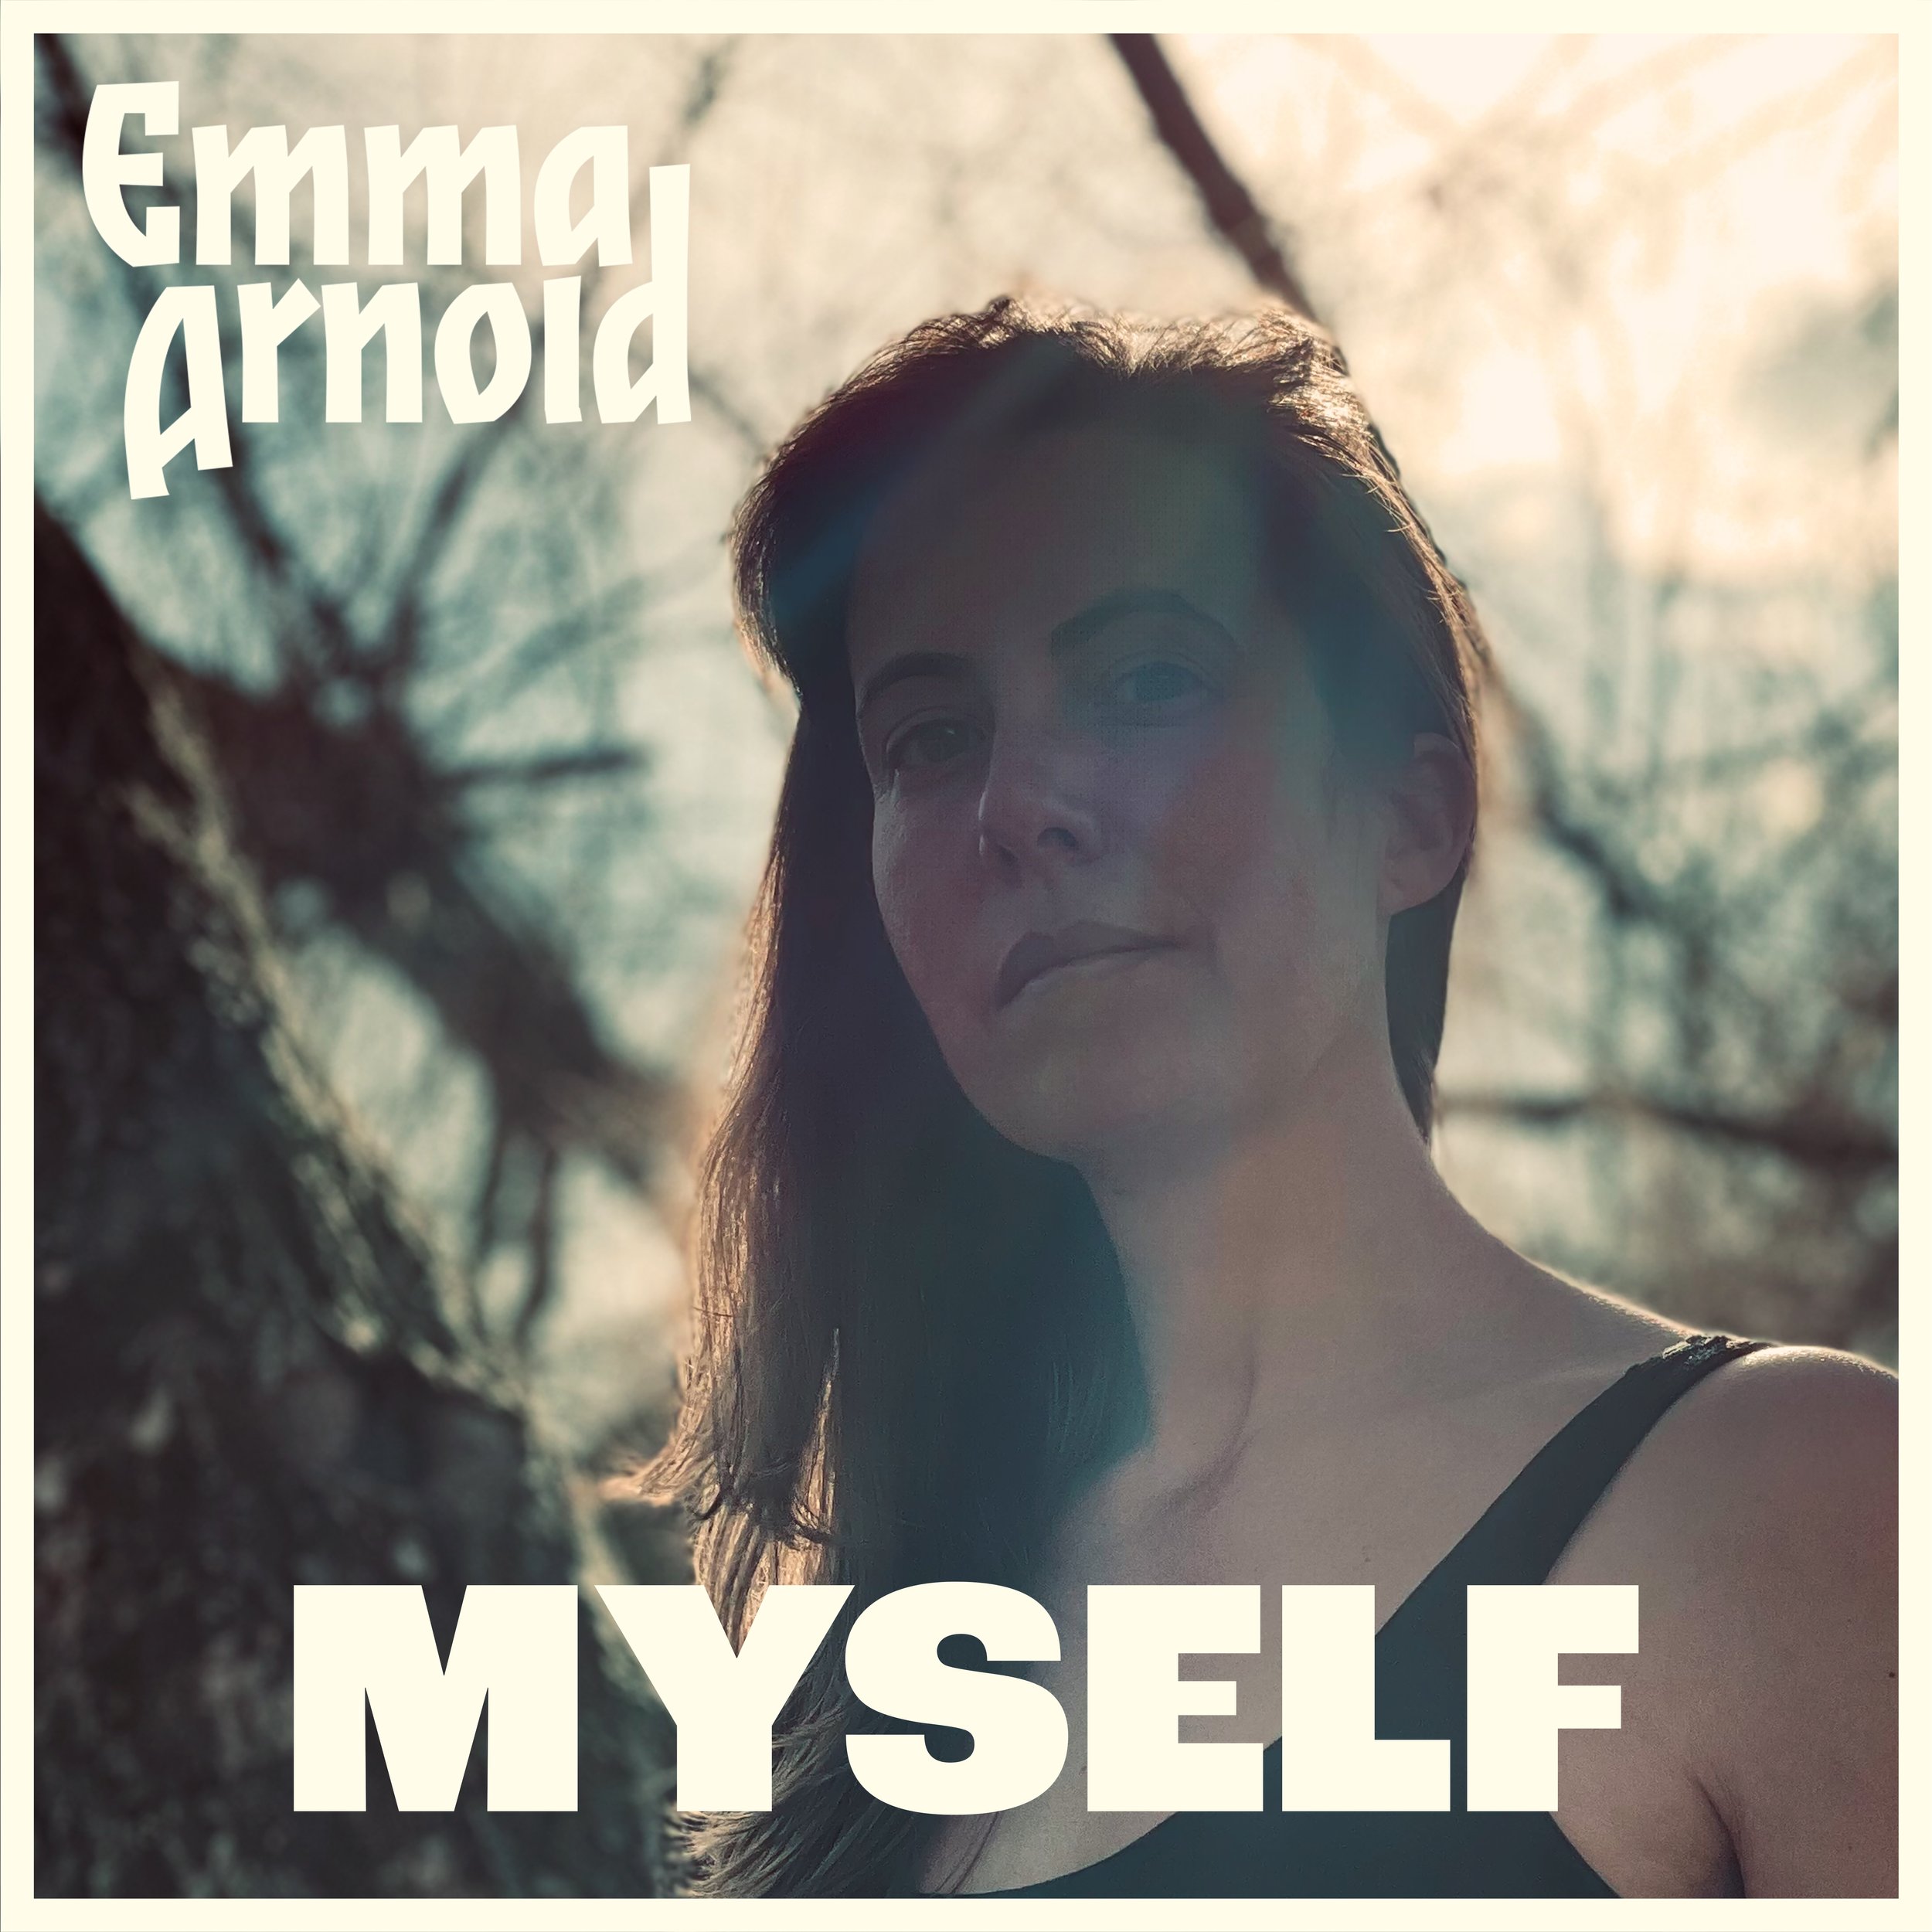 BM101 - Emma Arnold - Myself (Digital) 6000x6000 72 dpi).jpg